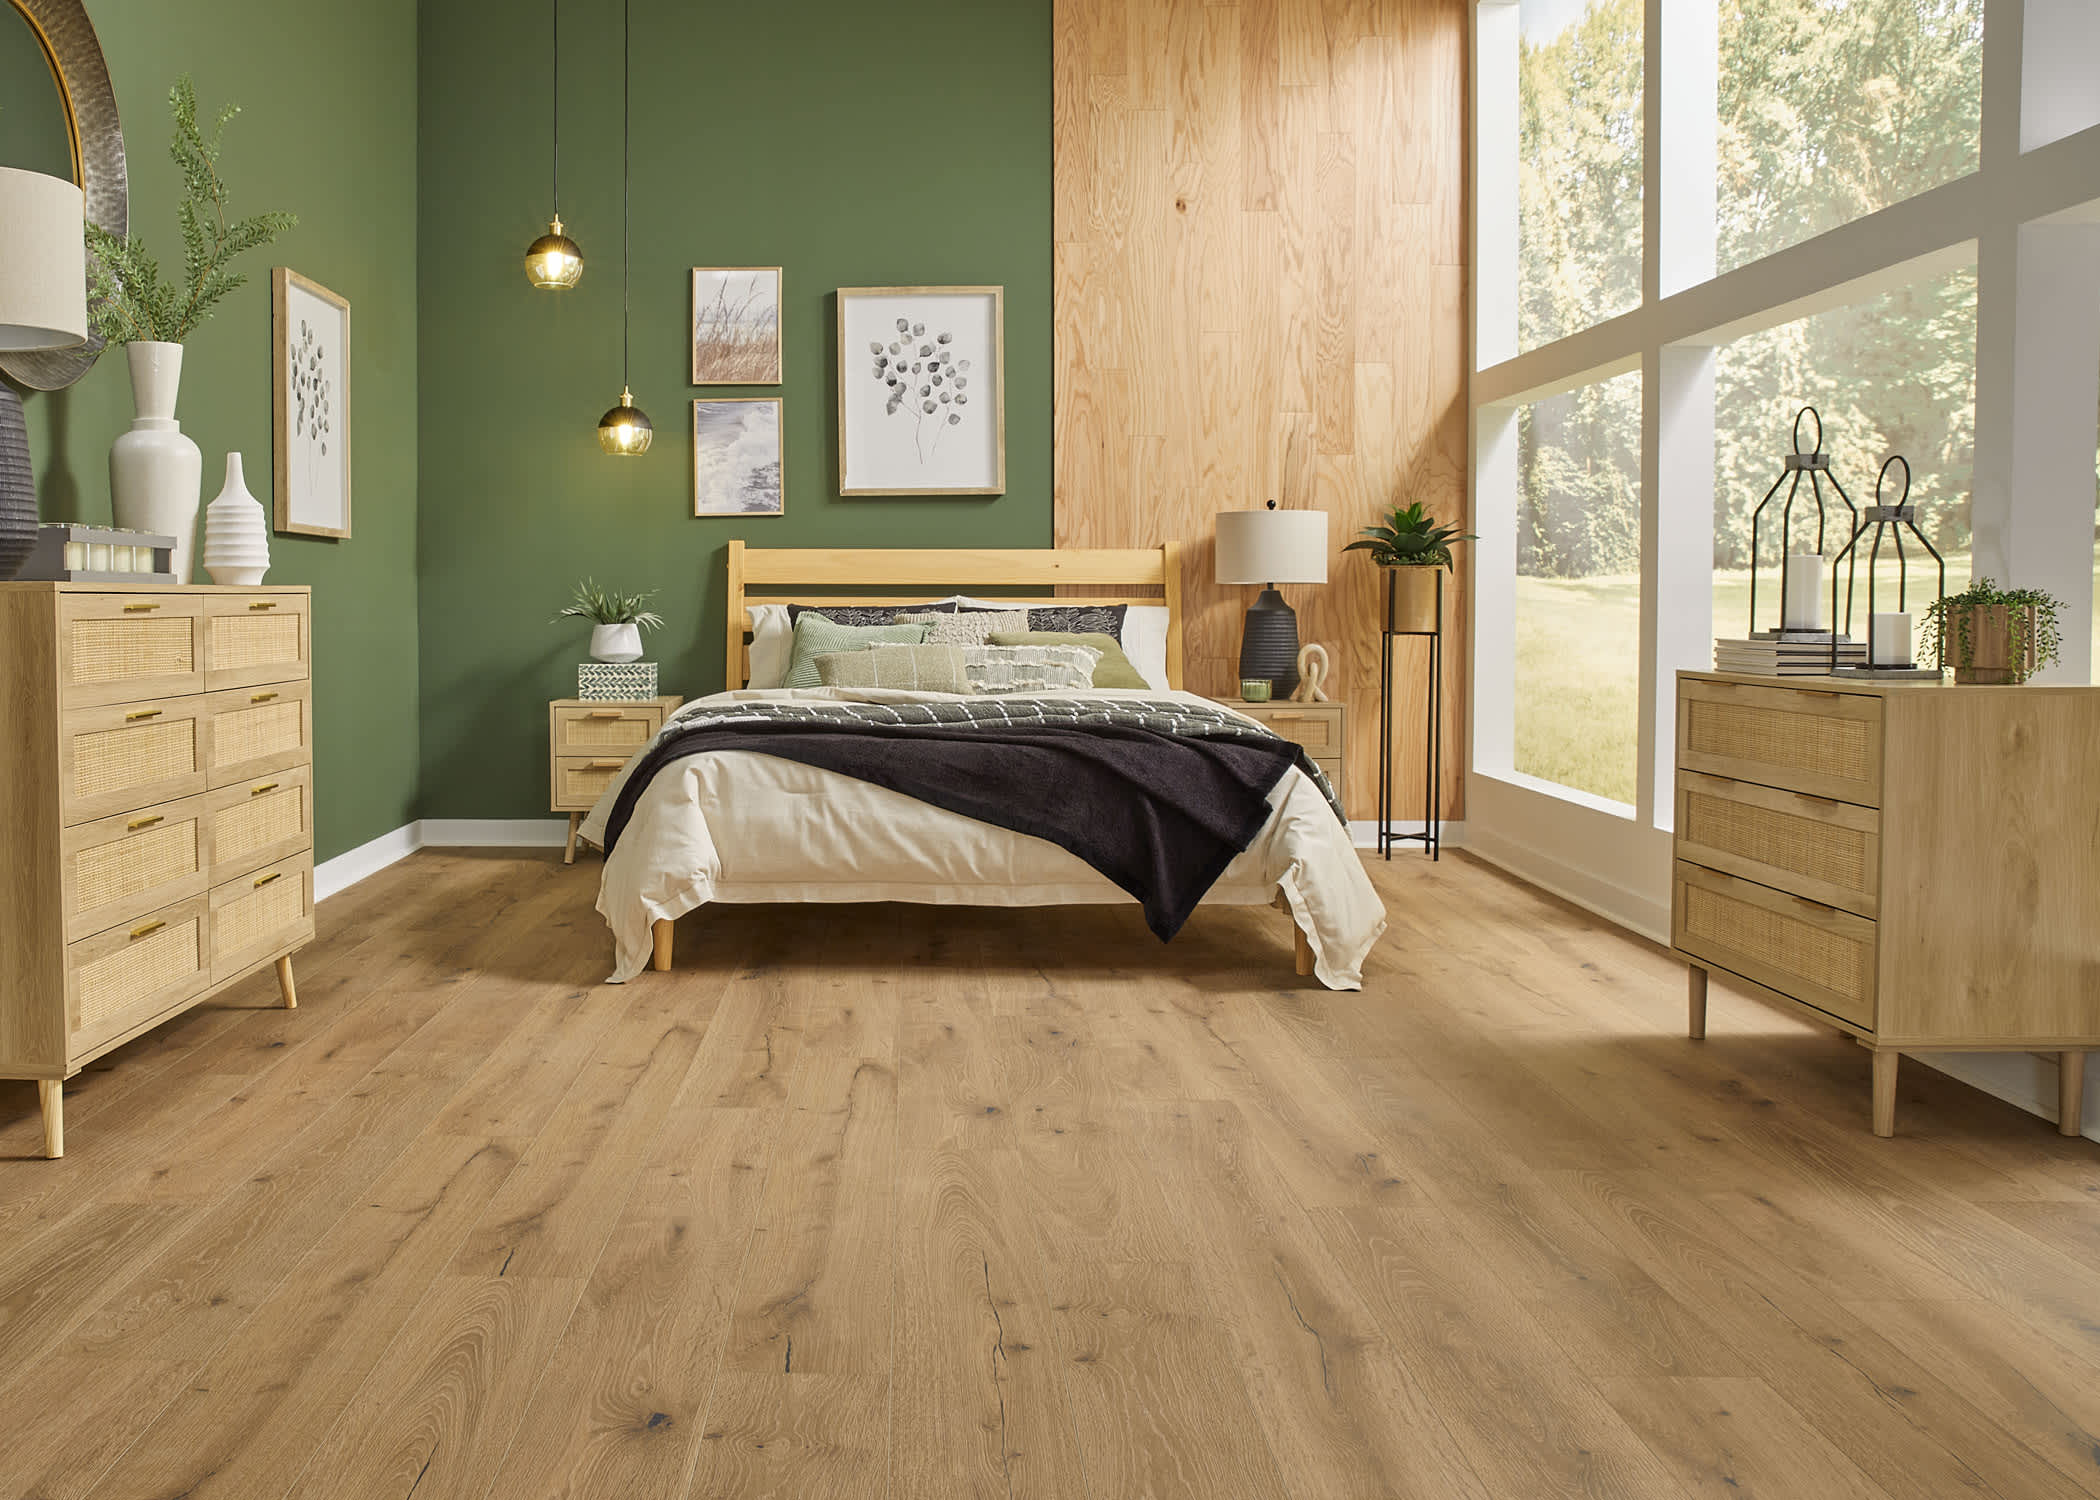 Blonde waterproof vinyl plank floor in bedroom with green walls plus blonde wood accent wall and blonde wood bed with cream and brown bedding and blonde wood tables